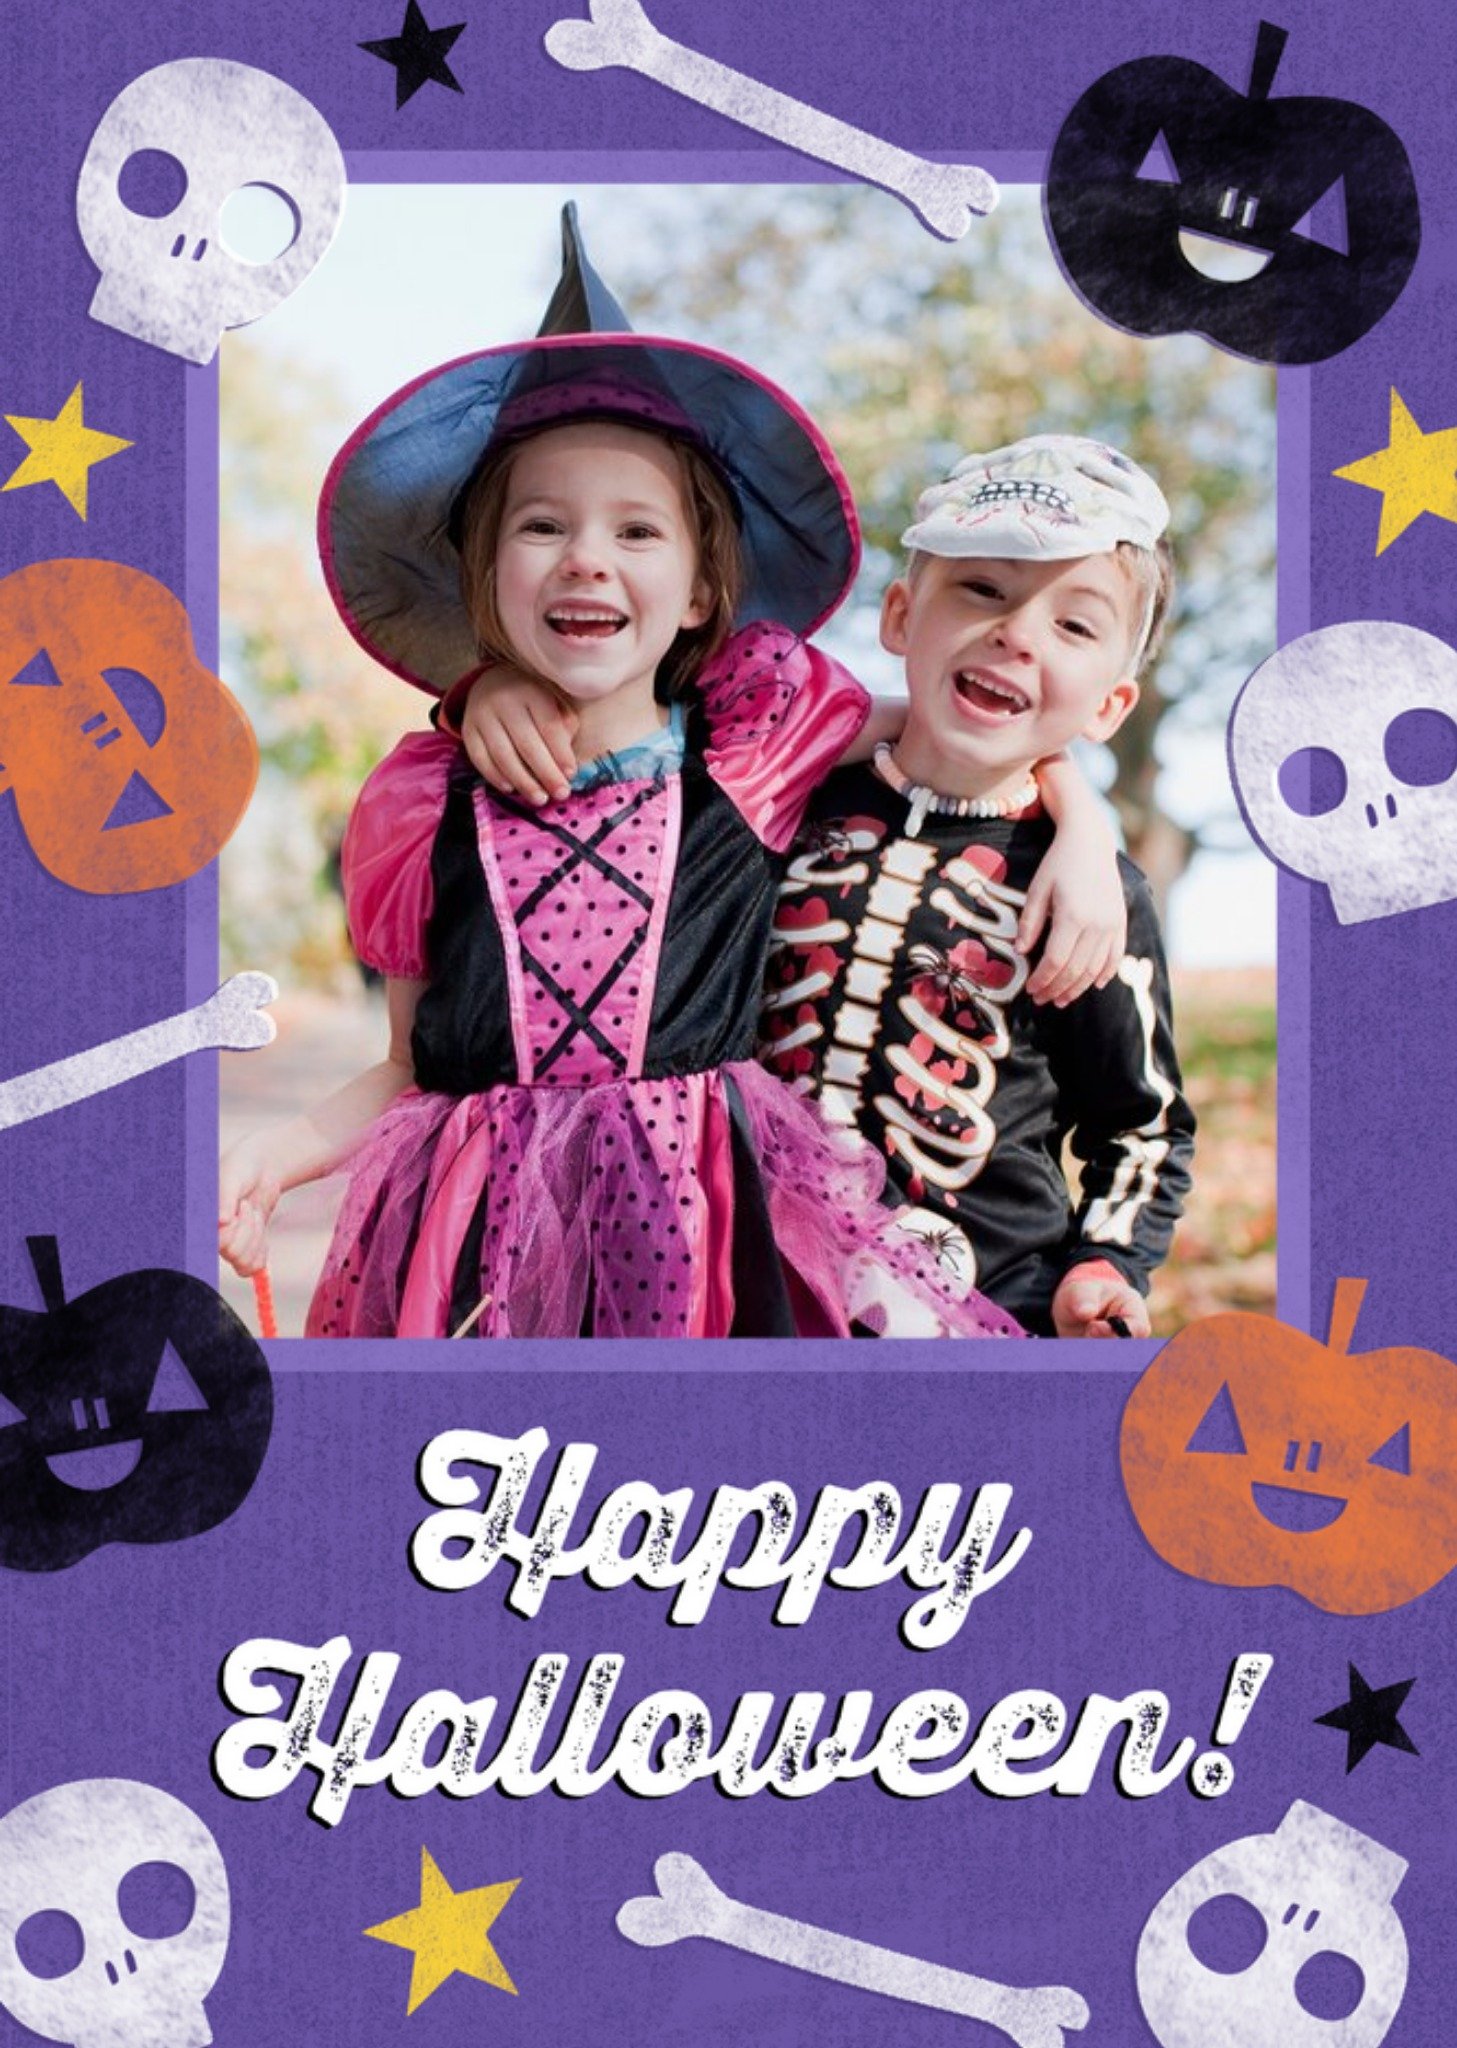 Moonpig Halloween Stamps Photo Card Ecard